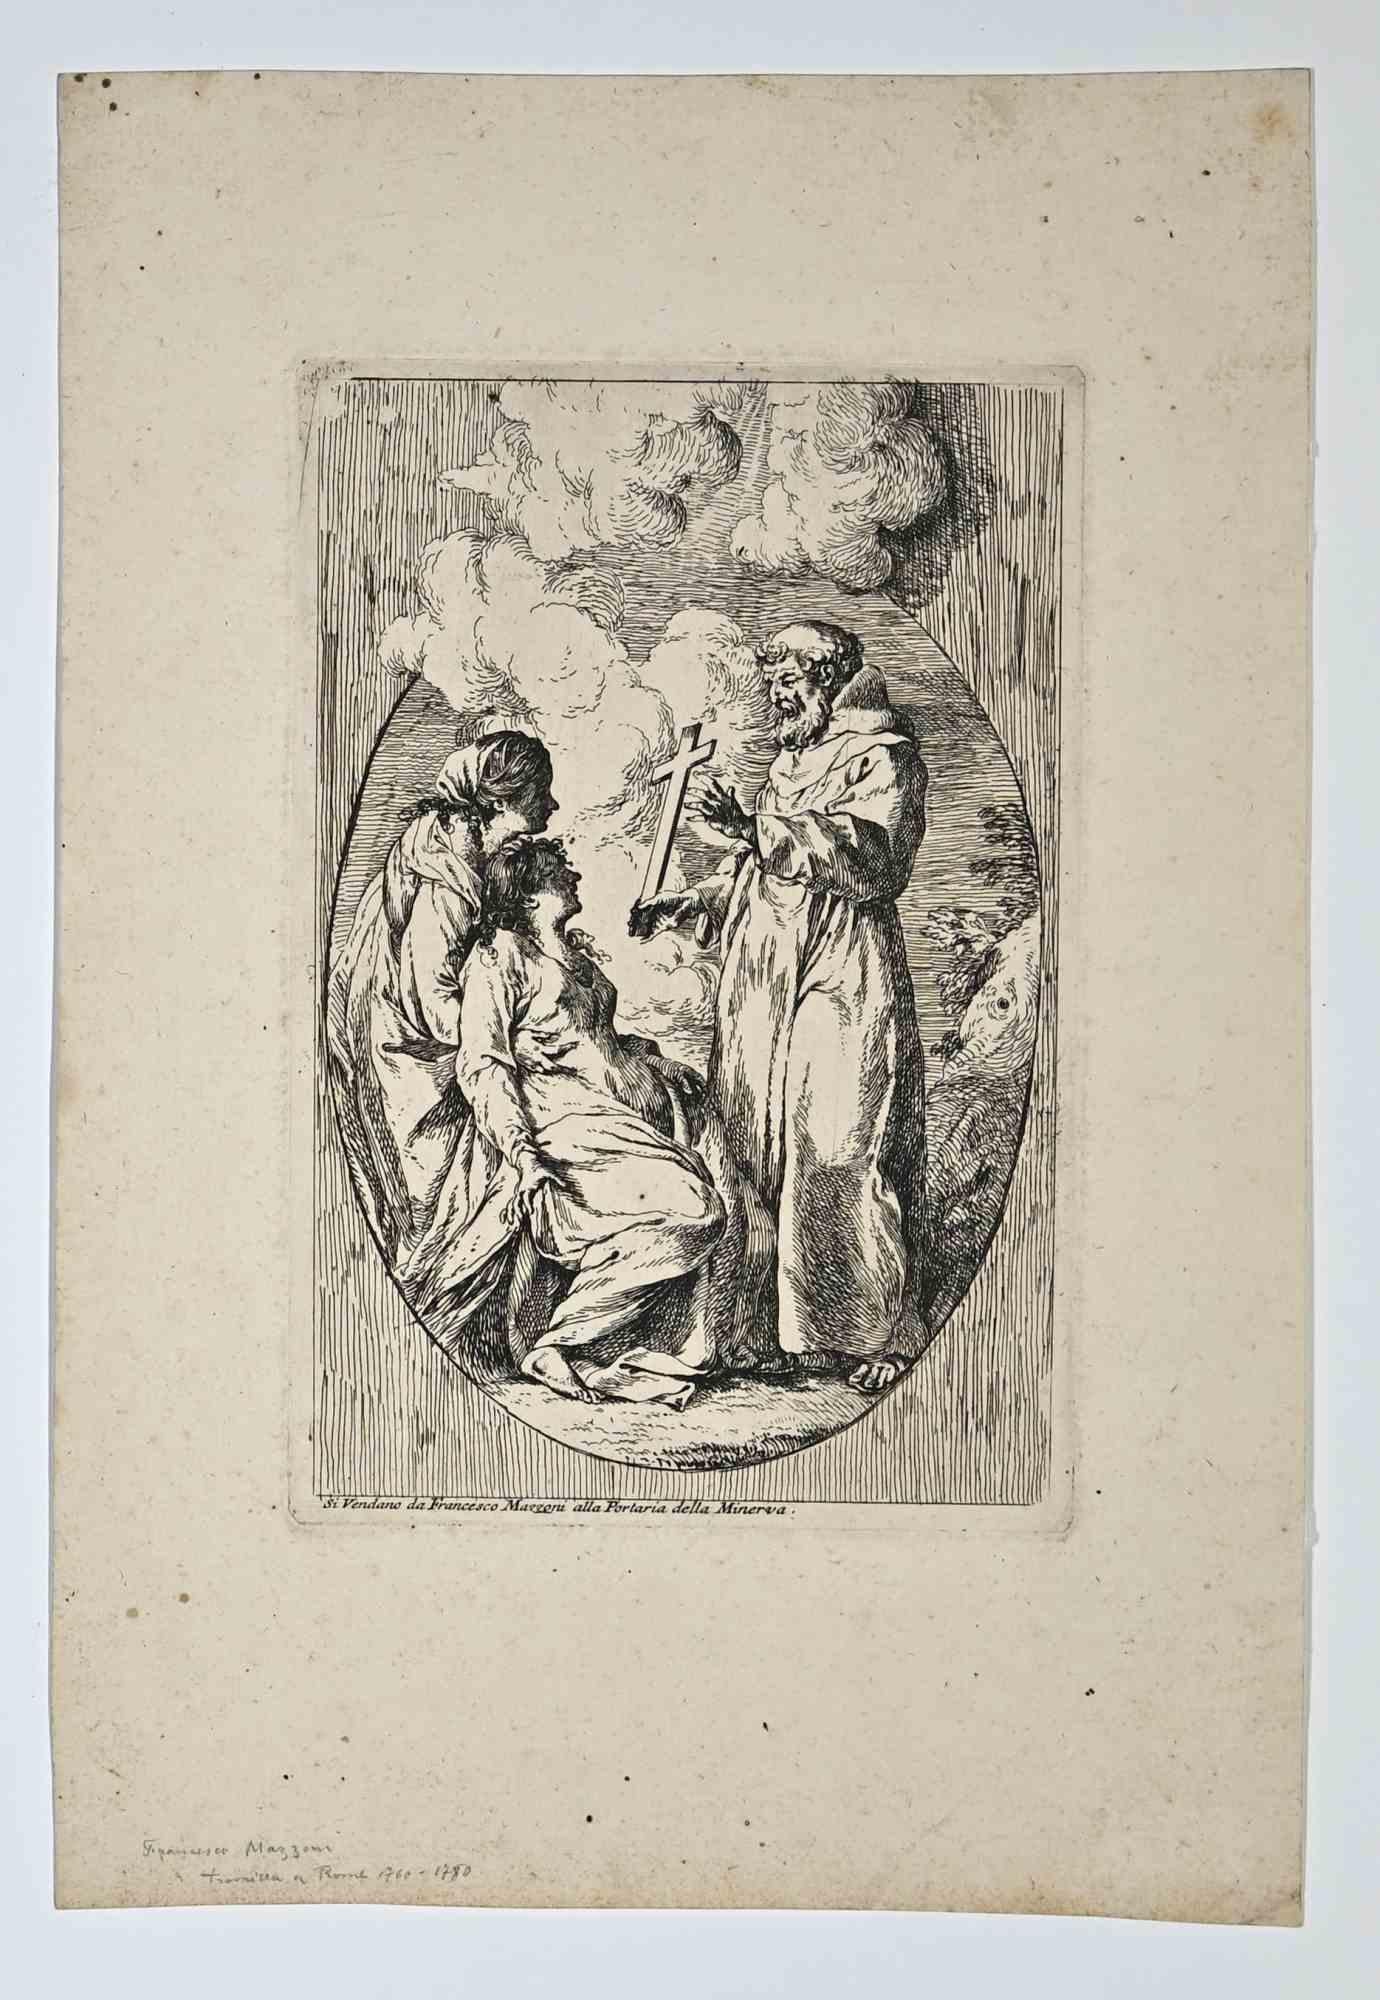 Axiom - Etching by Francesco Mazzoni - 18th Century